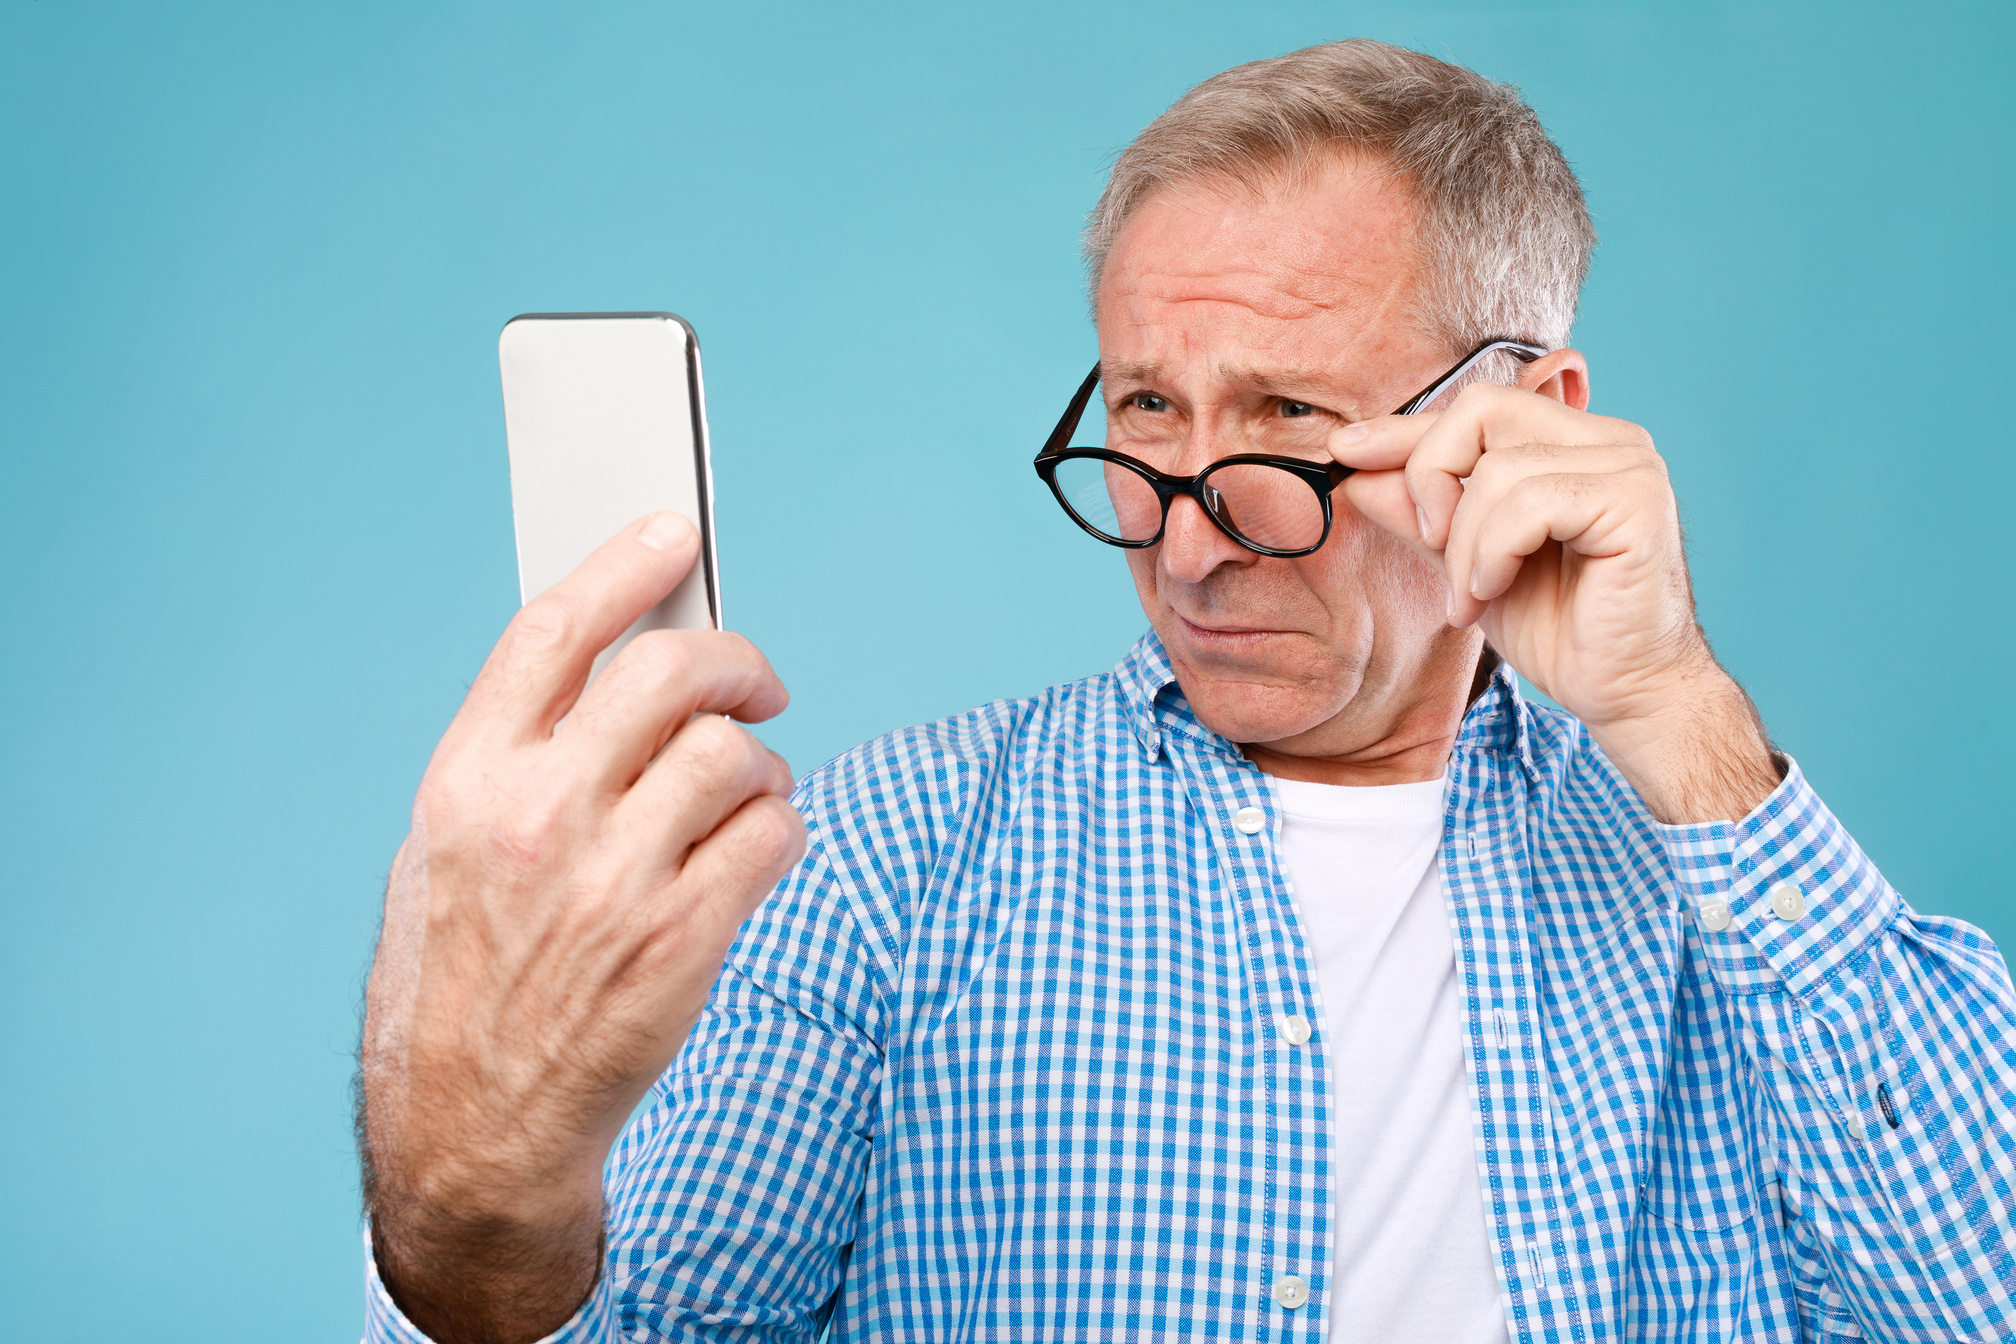 Mature Man Squinting Using Mobile Phone, Looking at Screen